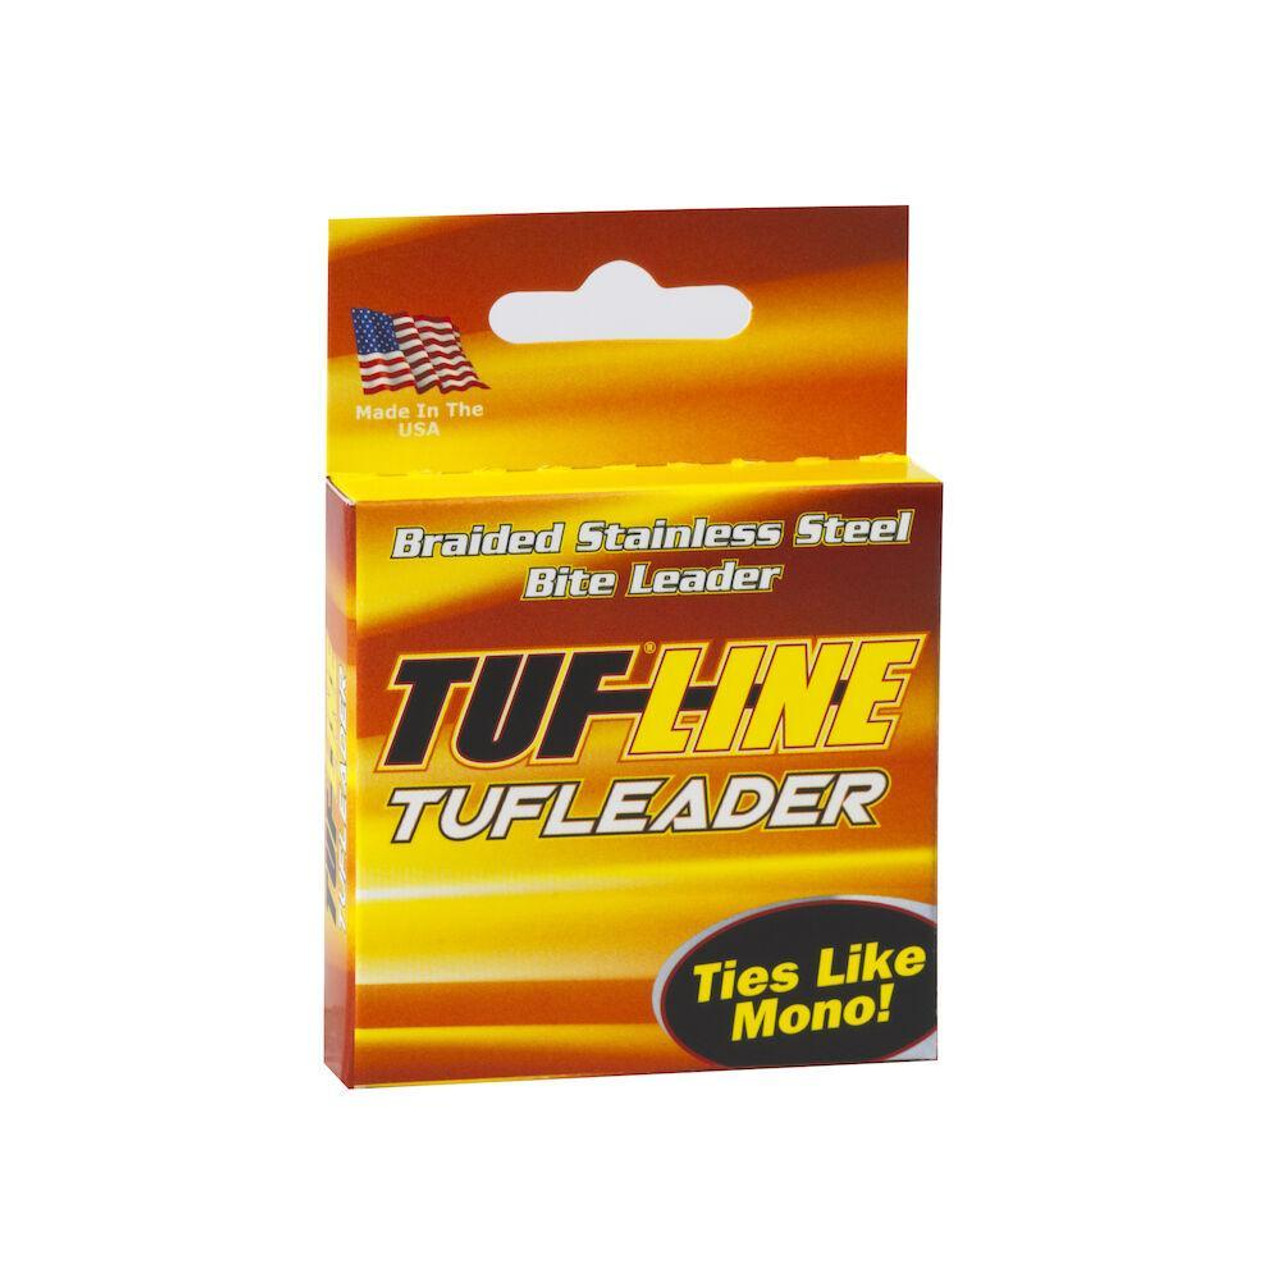 Tuf-Line TUF-Leader - Stainless Steel